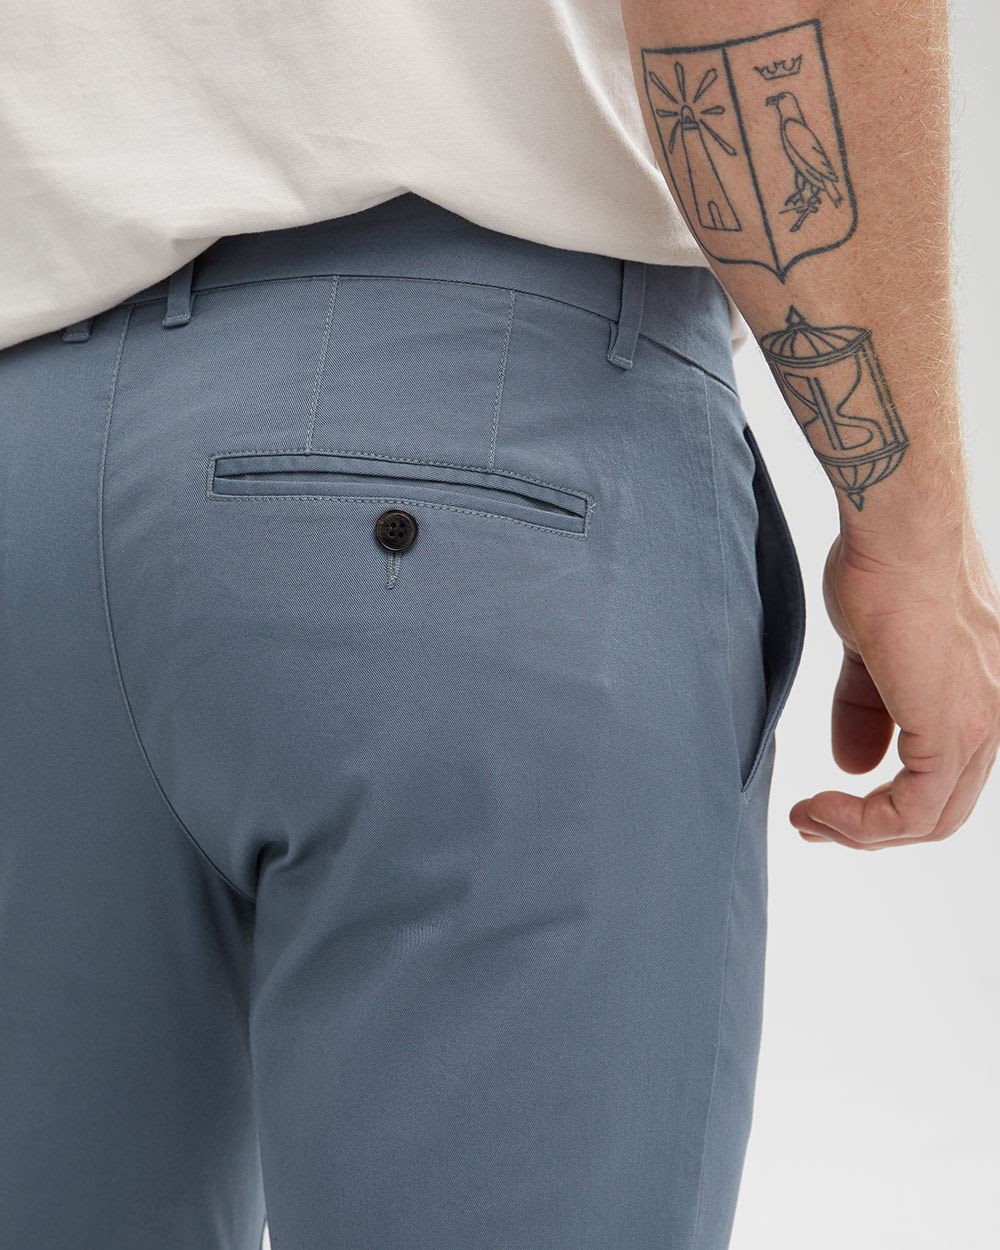 Slim Fit Slash Pocket Classic Chino Pant